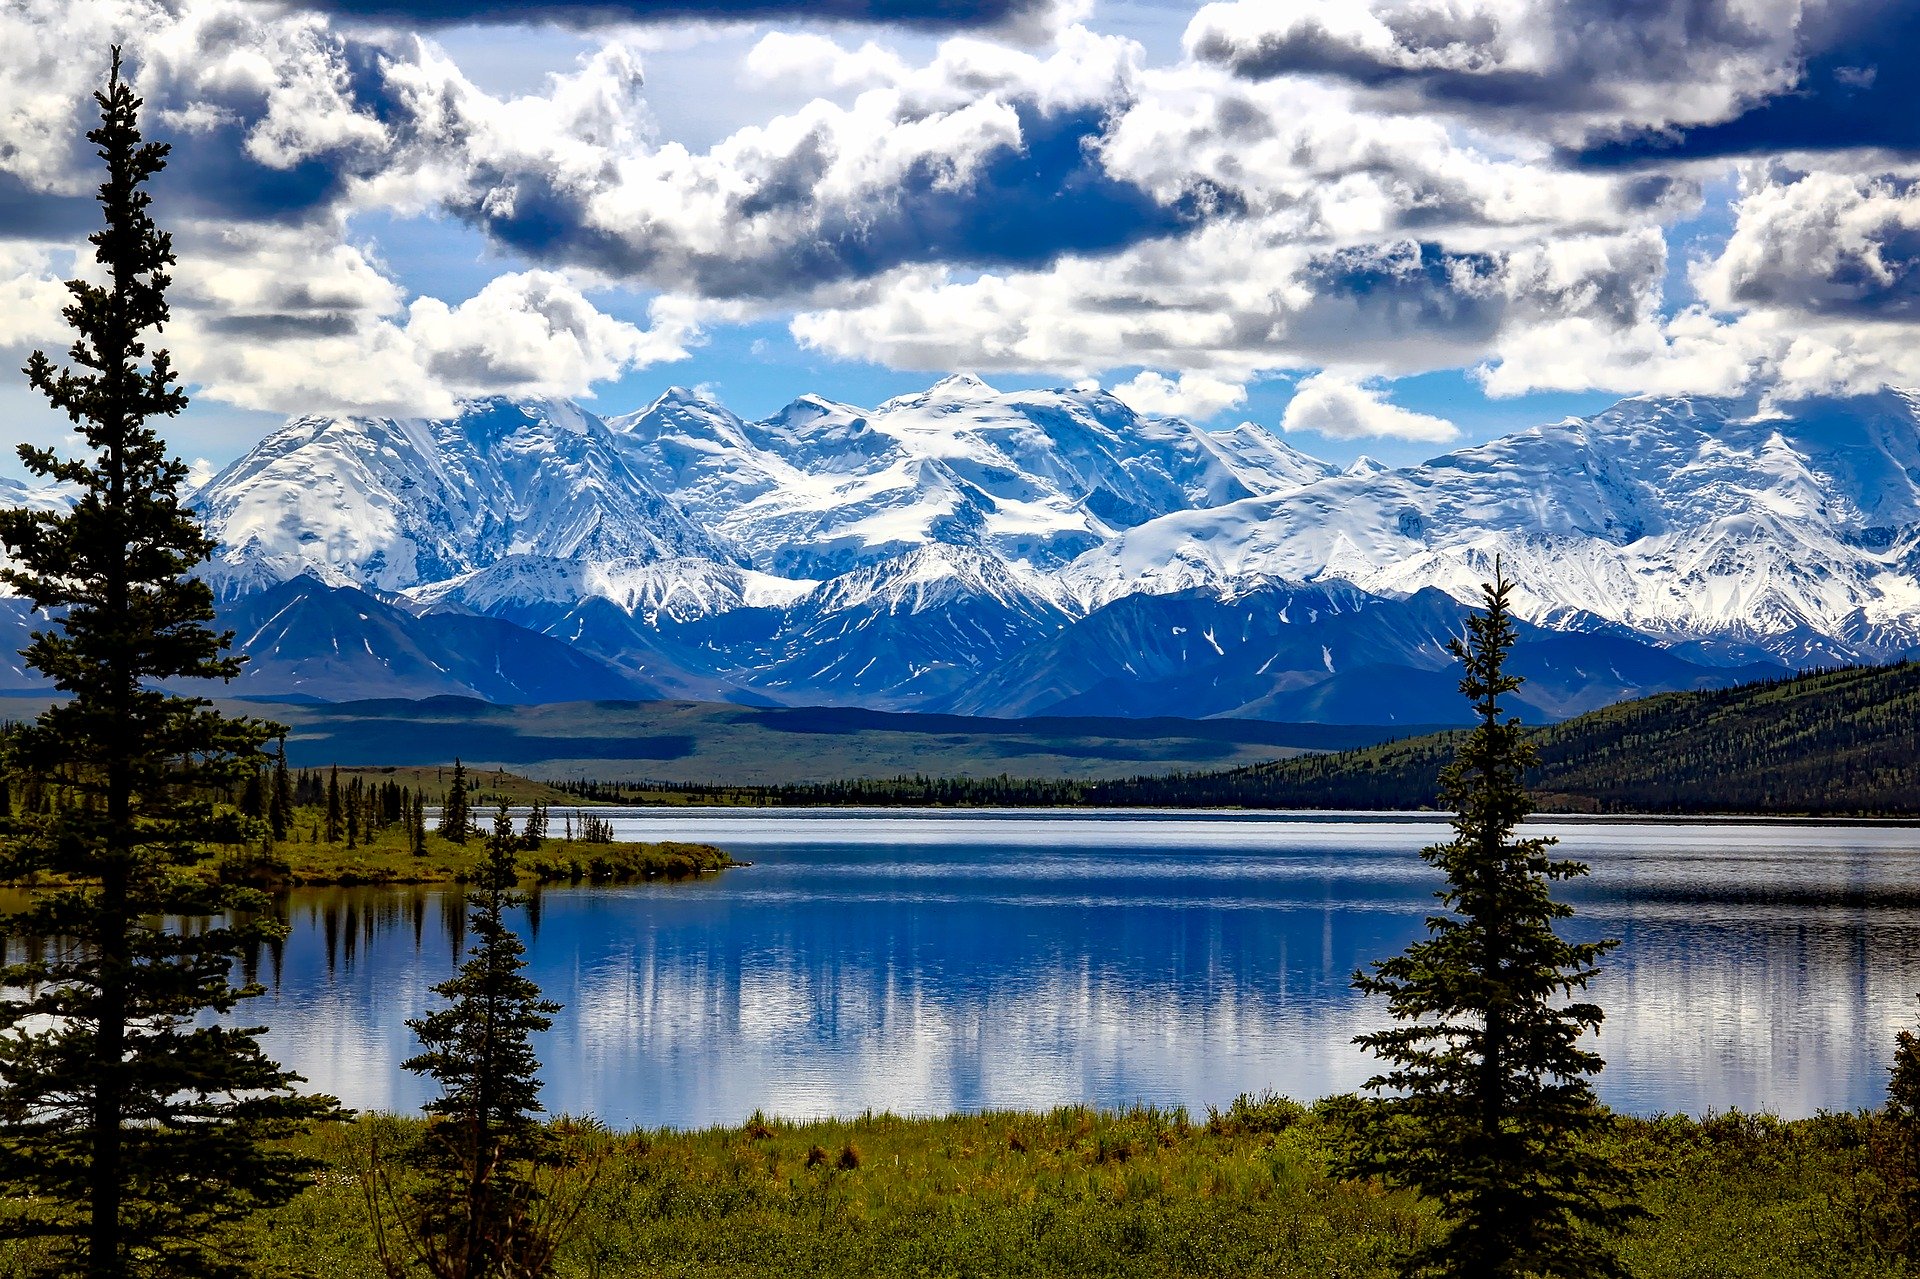 Denali National Park in Alaska (source: 12019, Pixabay)